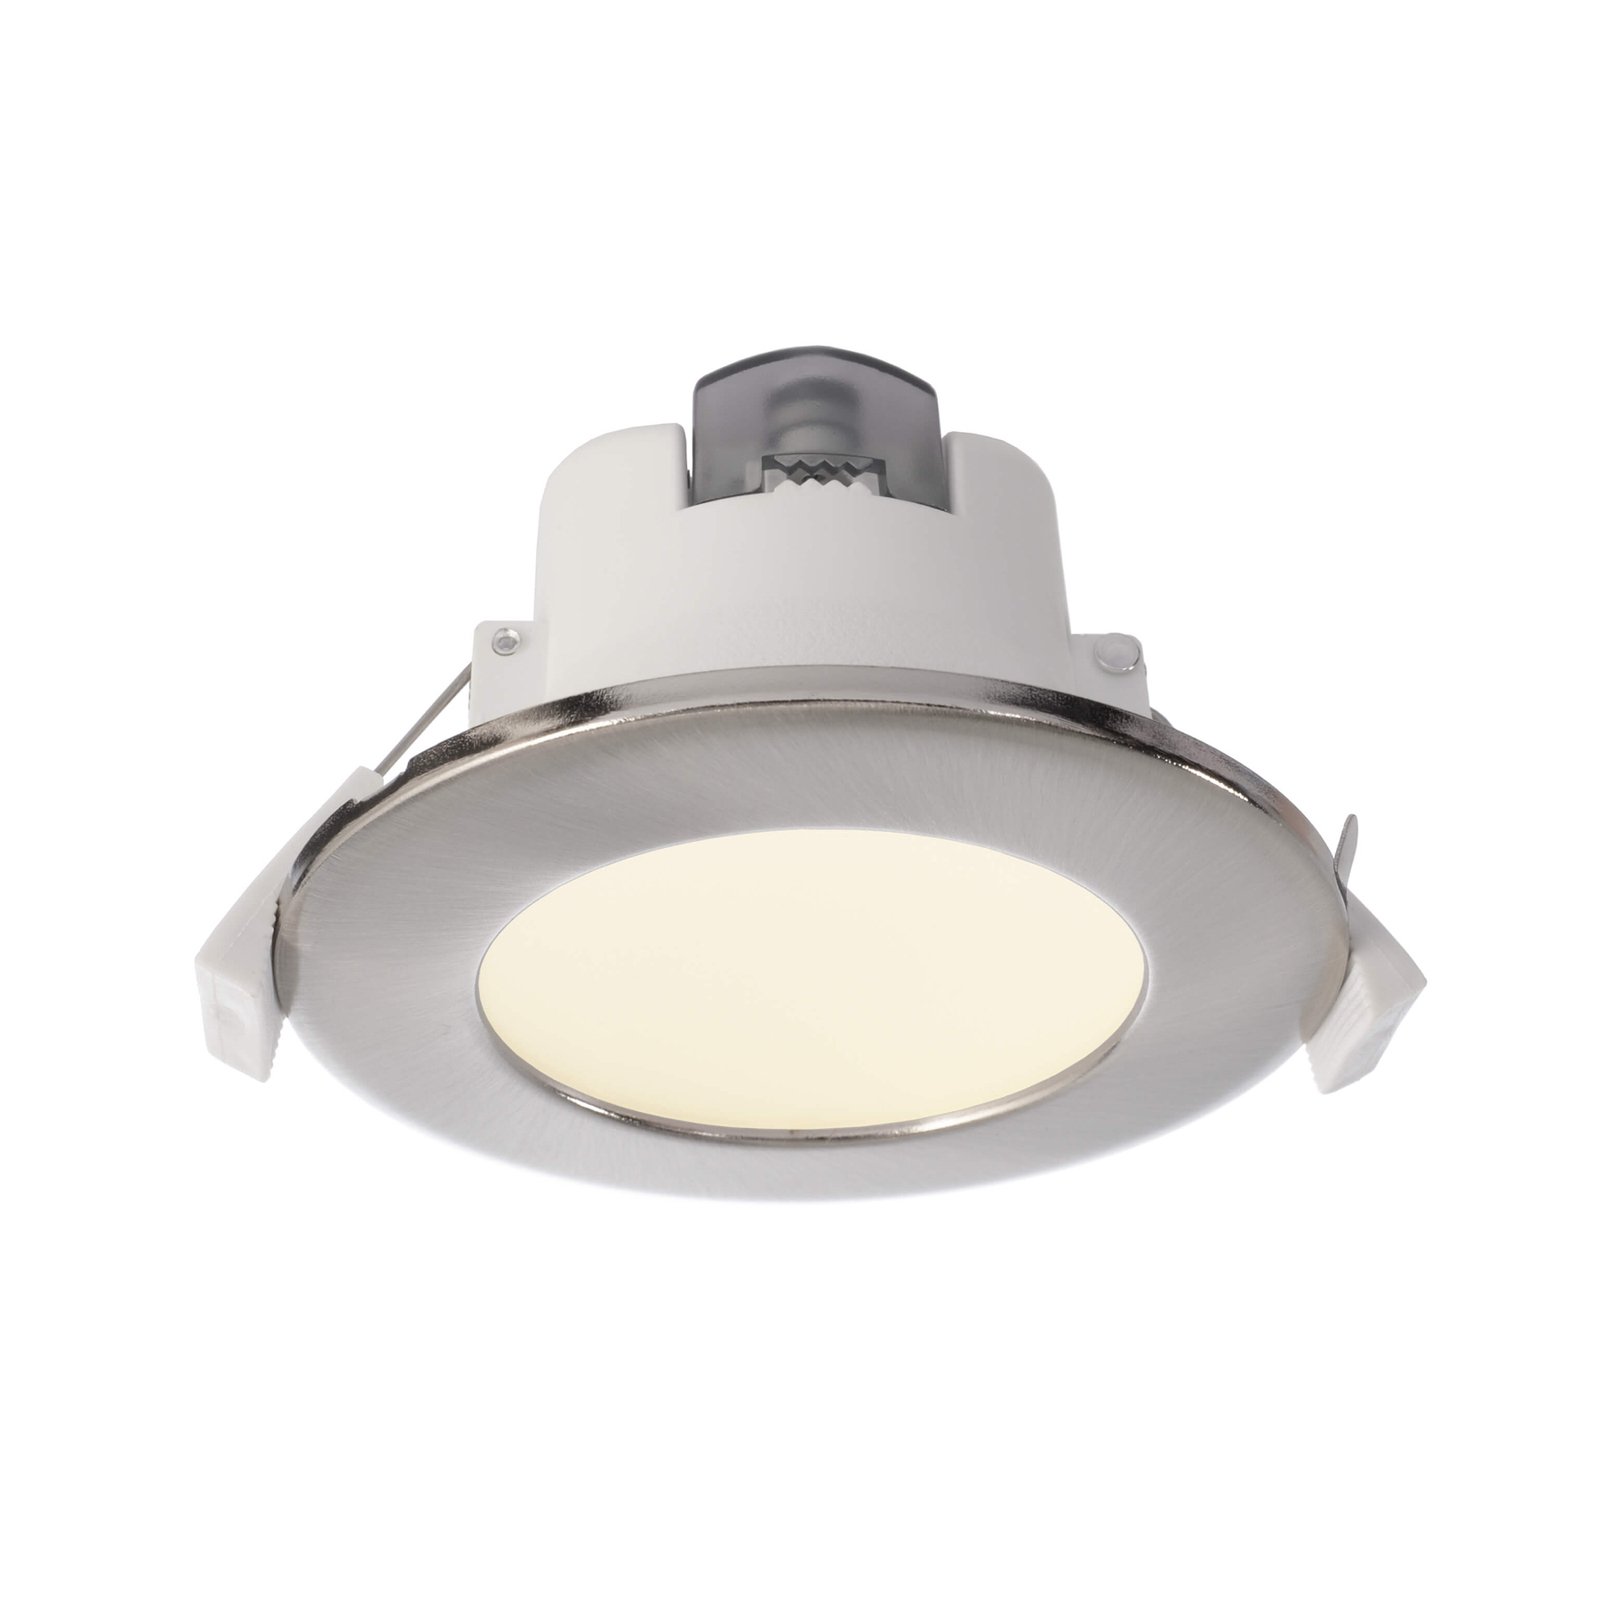 LED-innfellingslampe Acrux 68, hvit, Ø 9,5 cm